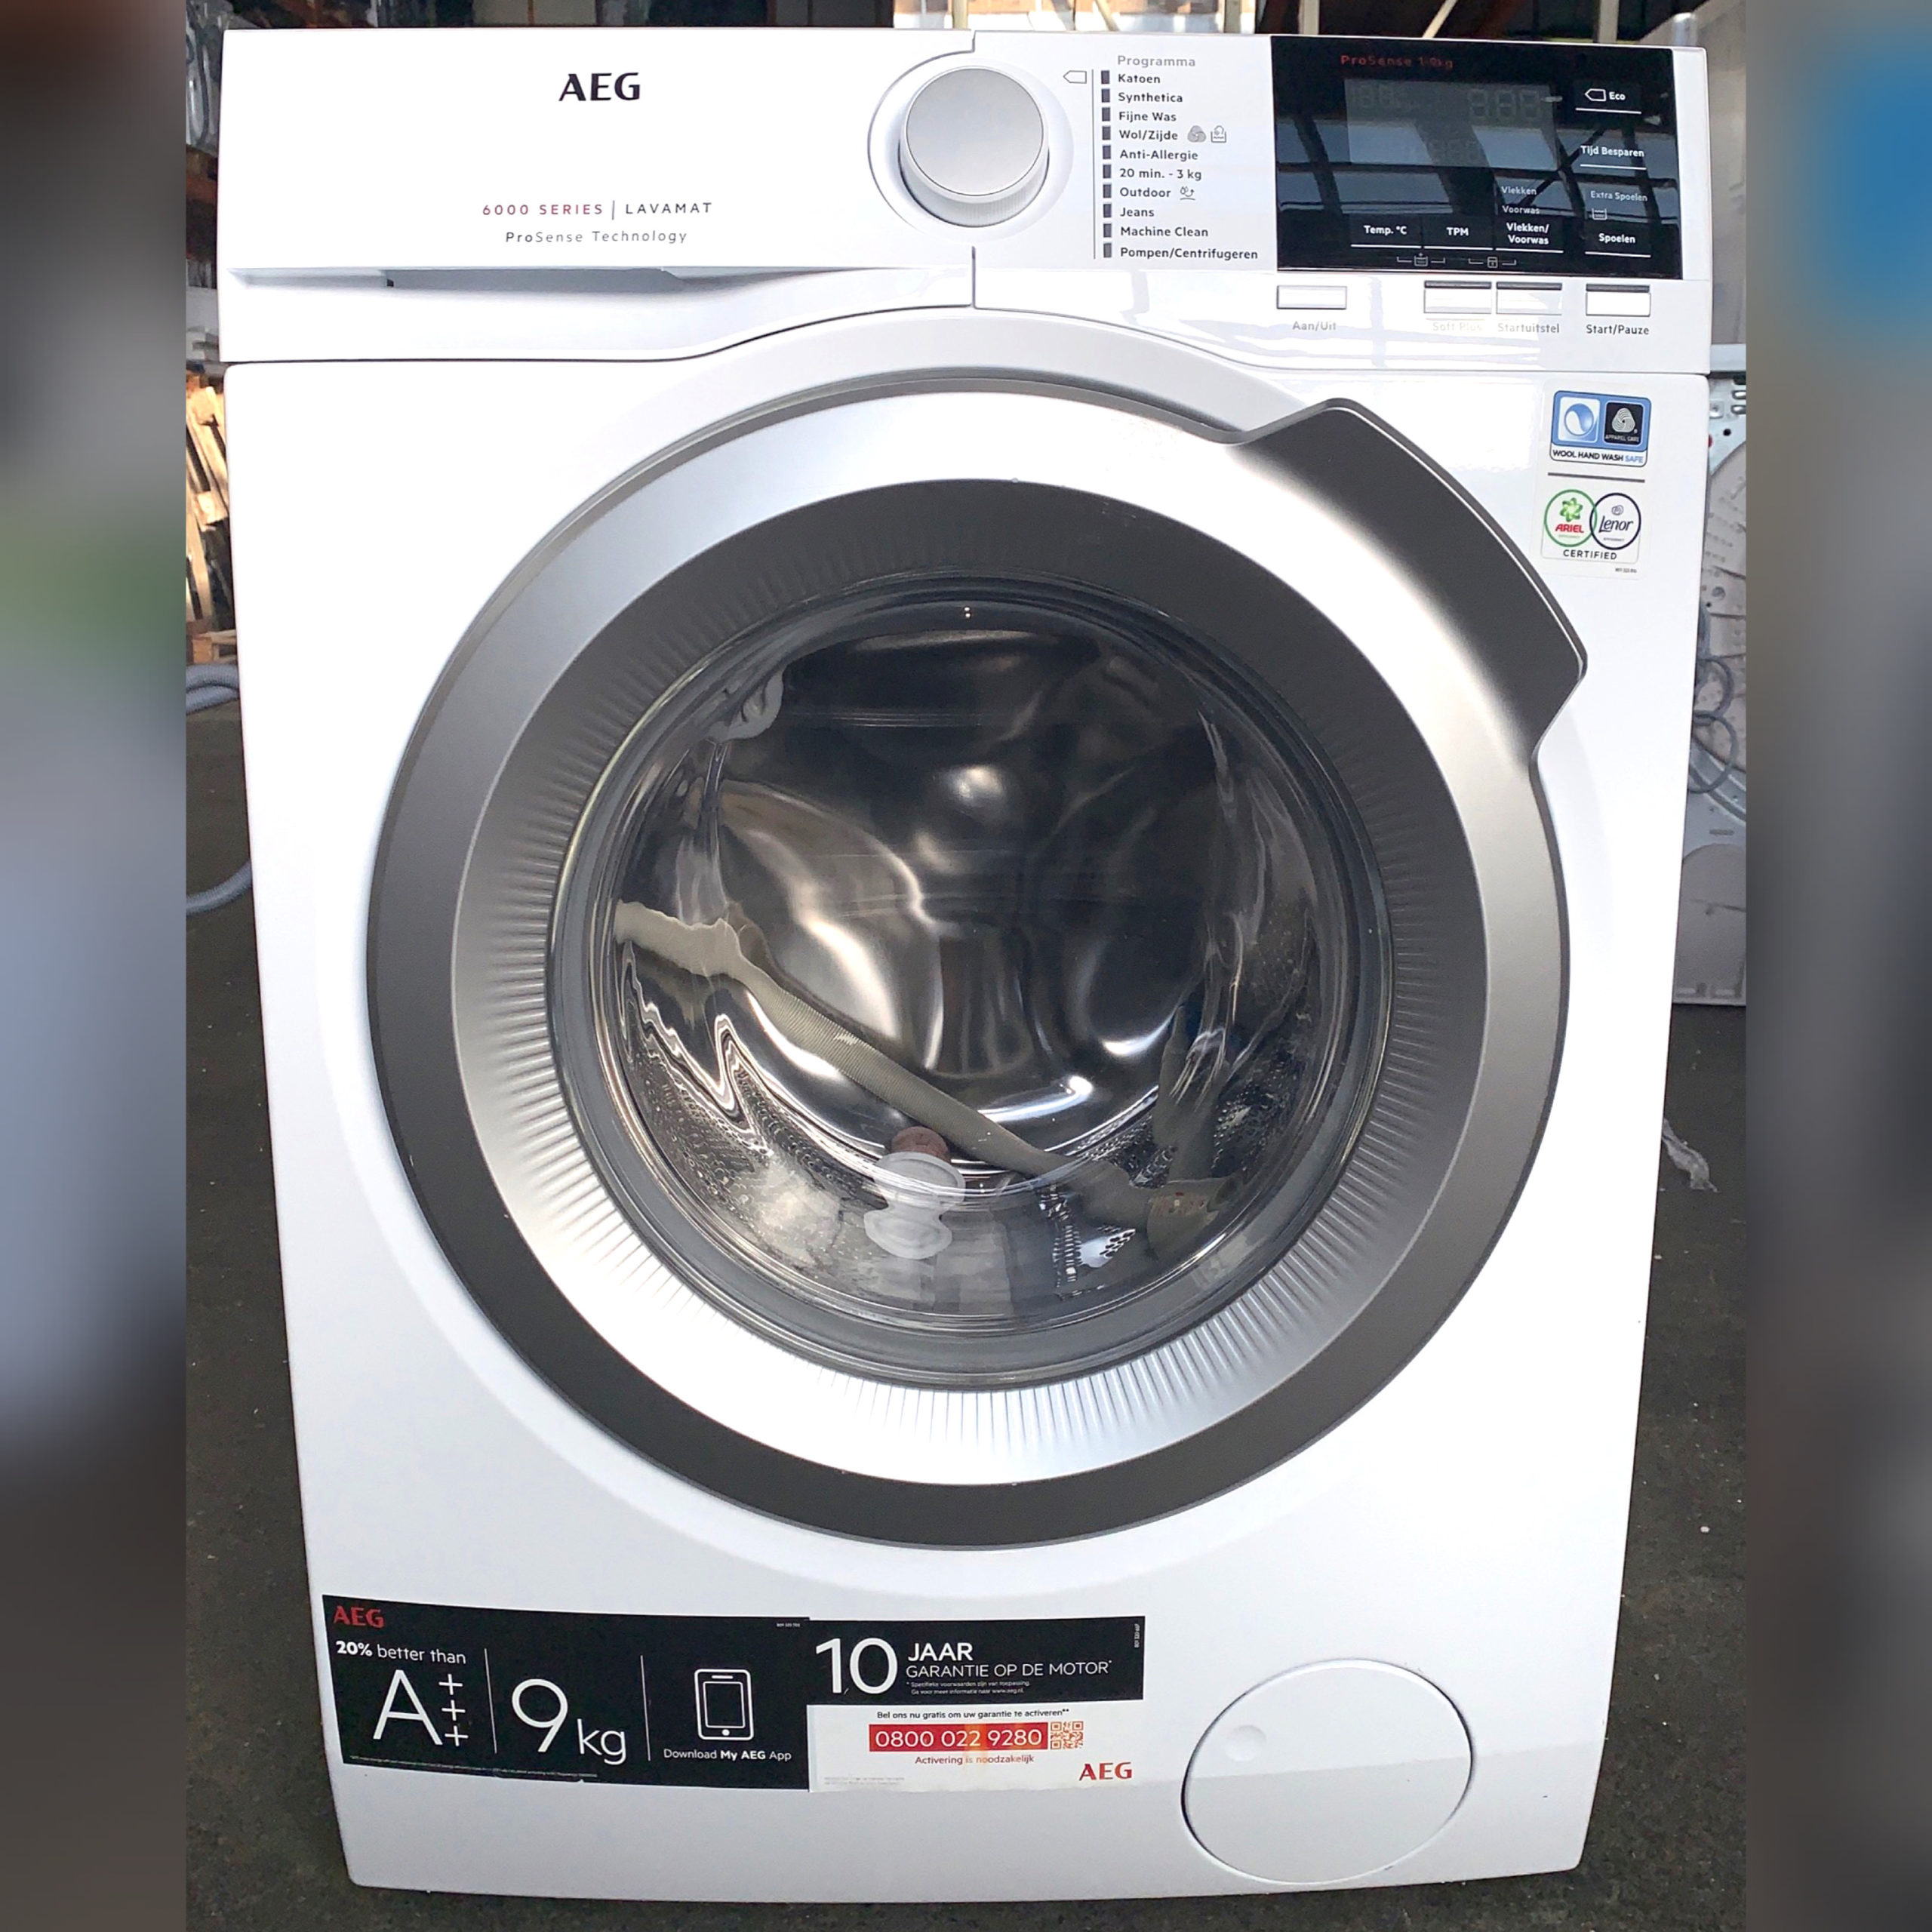 Productie convergentie Wiskundig Wasmachine AEG 6000SERIES 9kg A+++ L6FBBERLIN €379,- Apparaten.nl -Altijd  goedkoper!